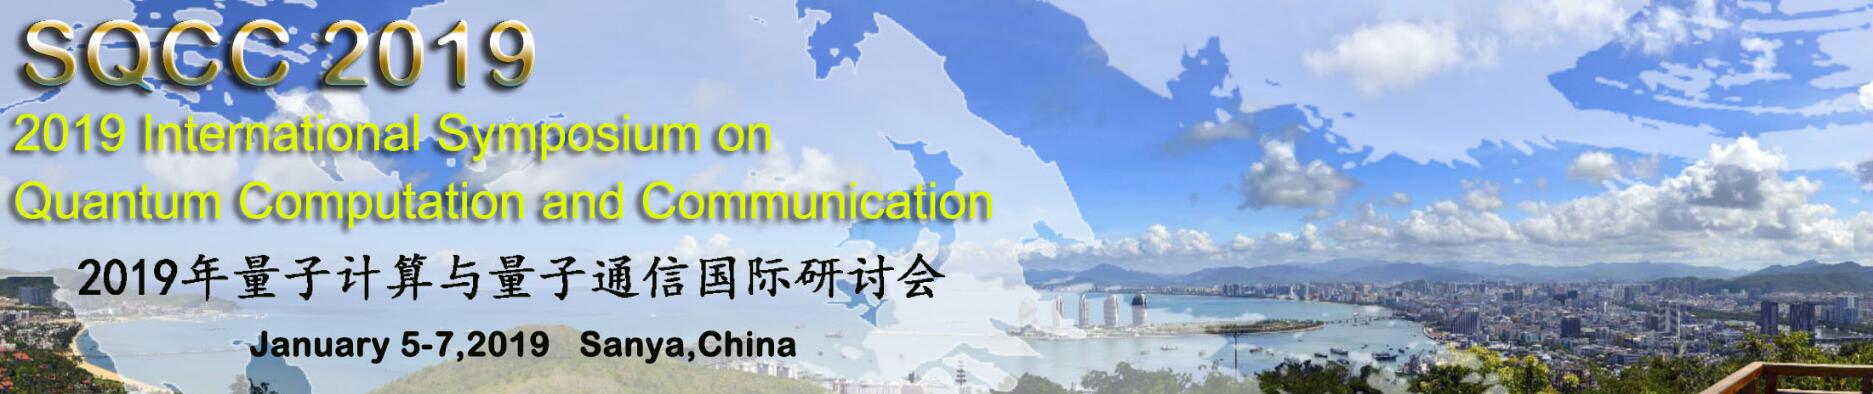 2019 International Symposium on Quantum Computation and Communication (SQCC 2019), Sanya, Hainan, China